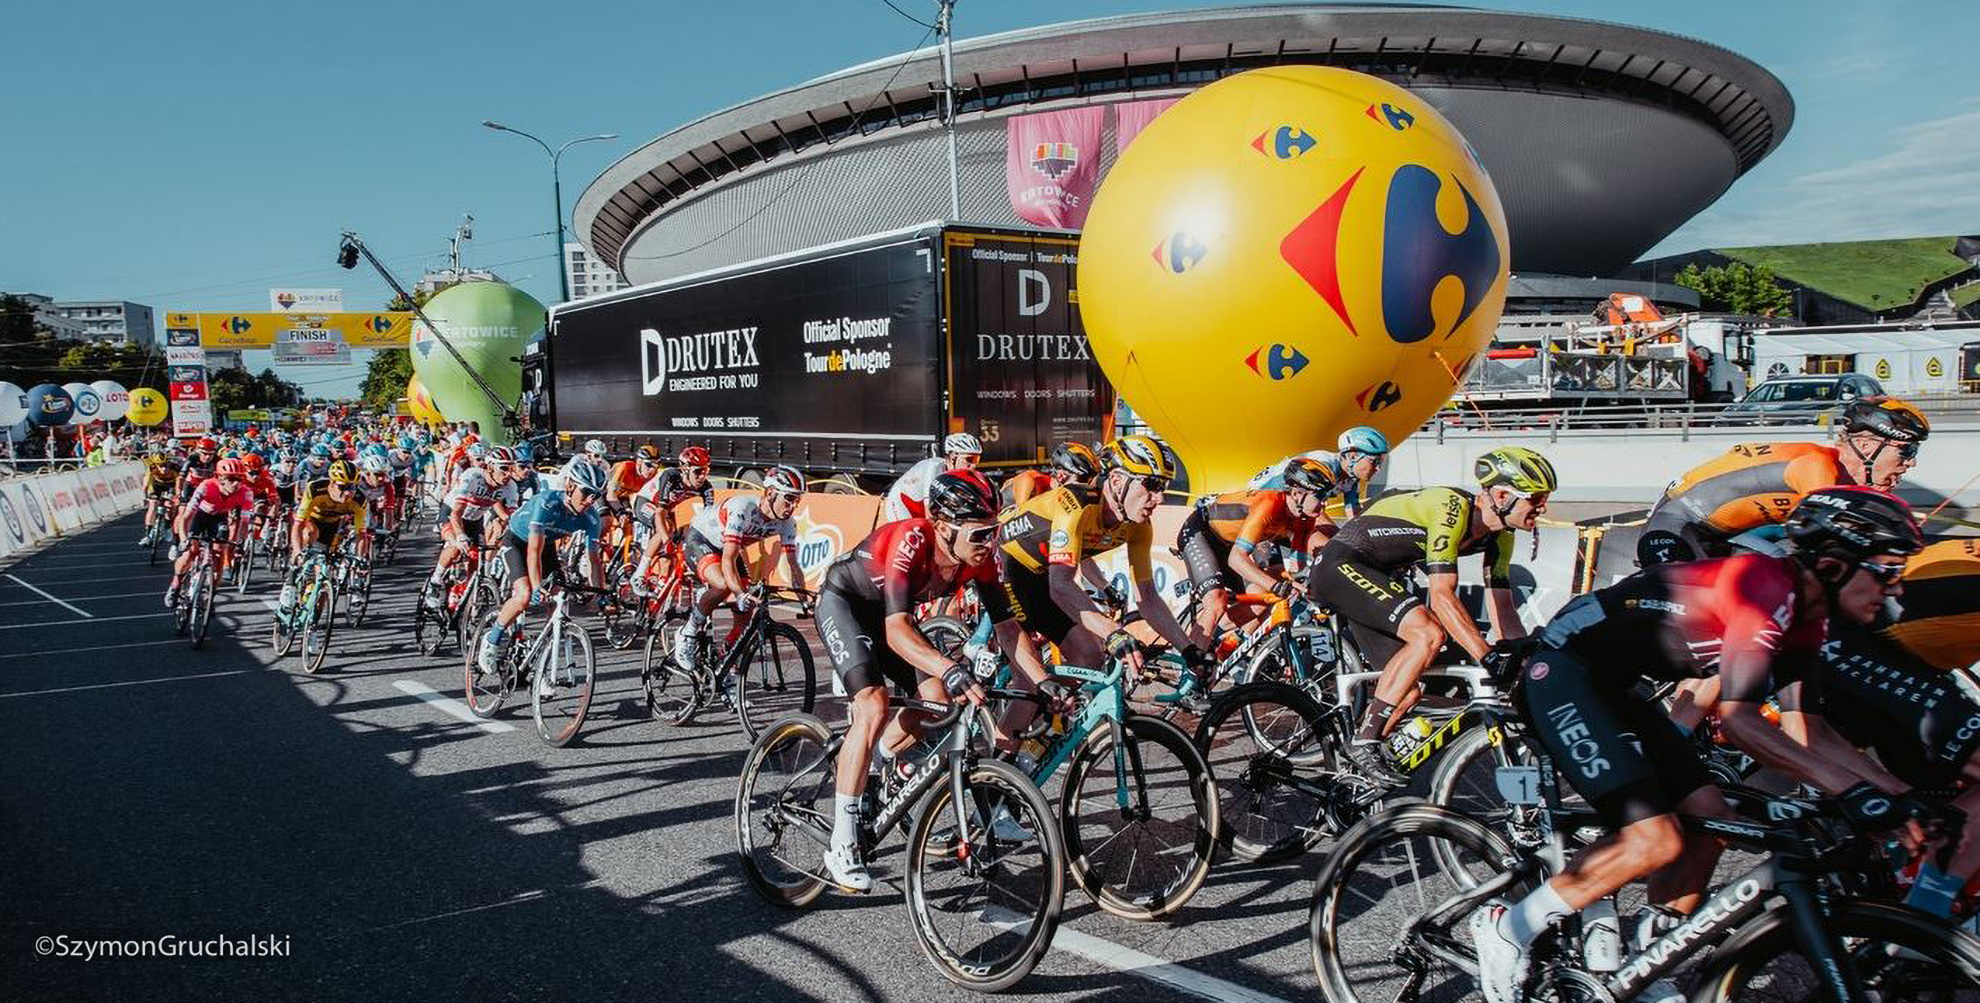 DRUTEX SA the Official Sponsor of the Tour de Pologne